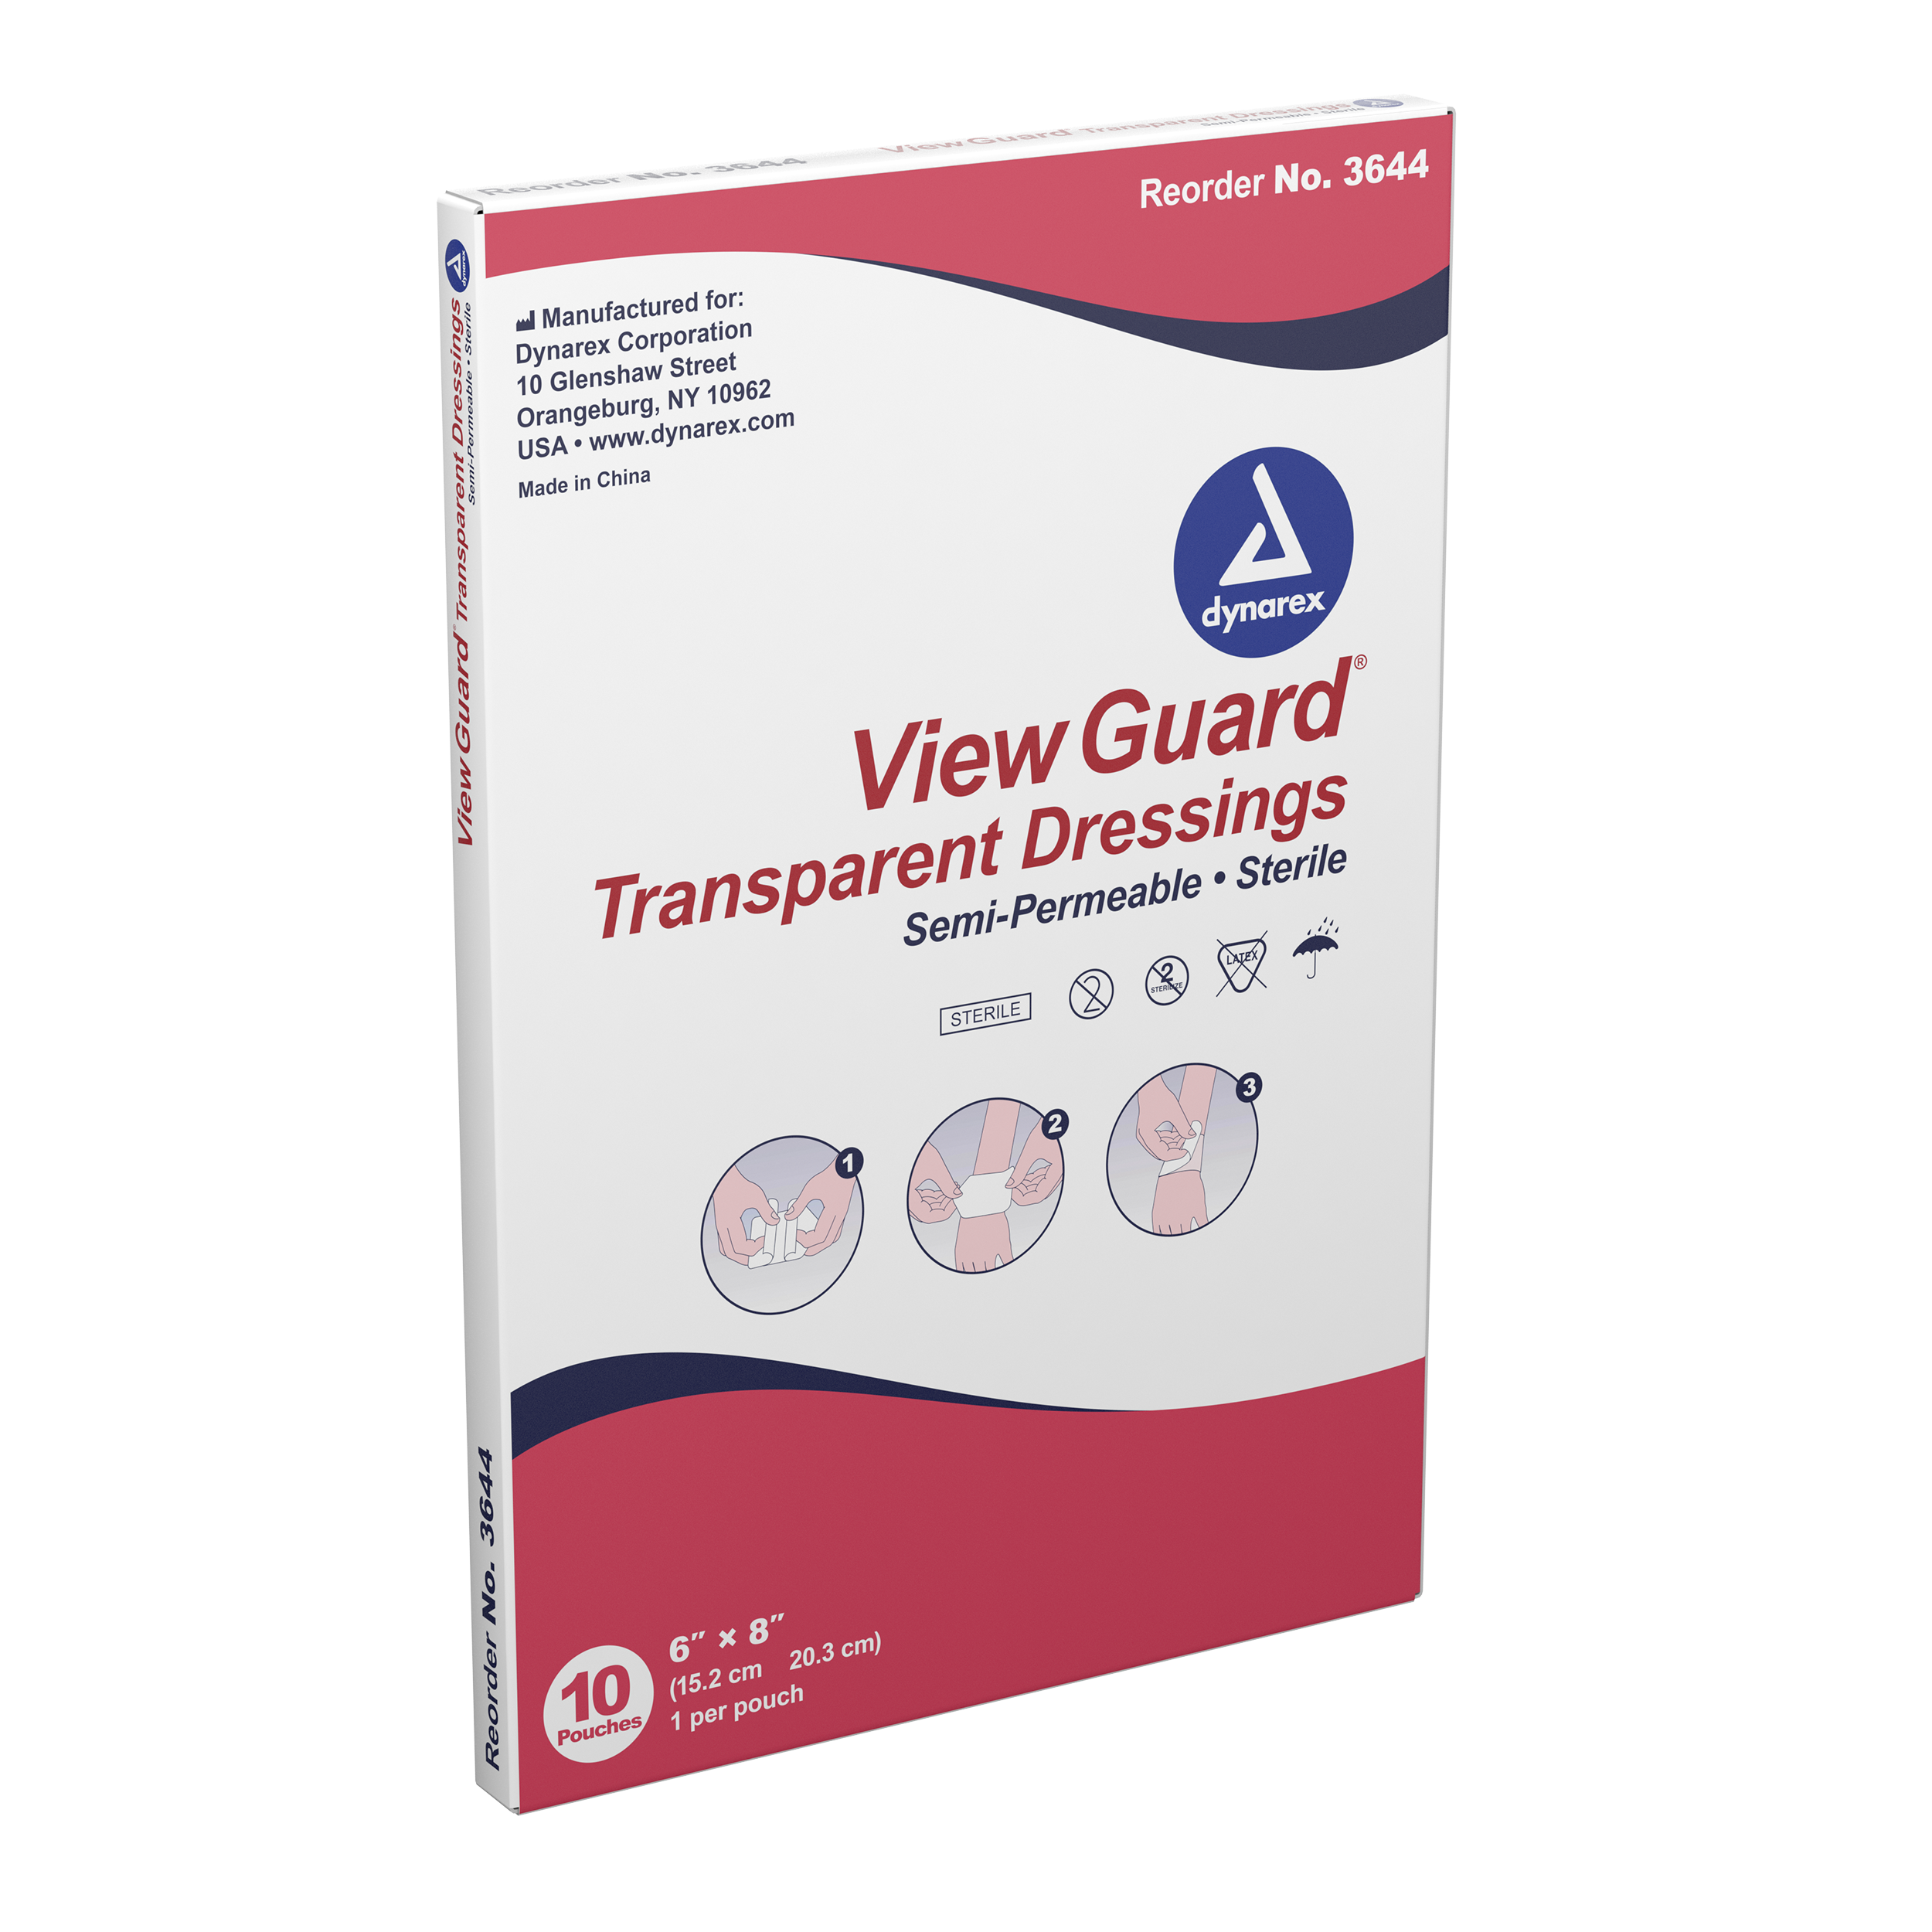 View Guard Transparent Dressings Sterile 6″ X 8″